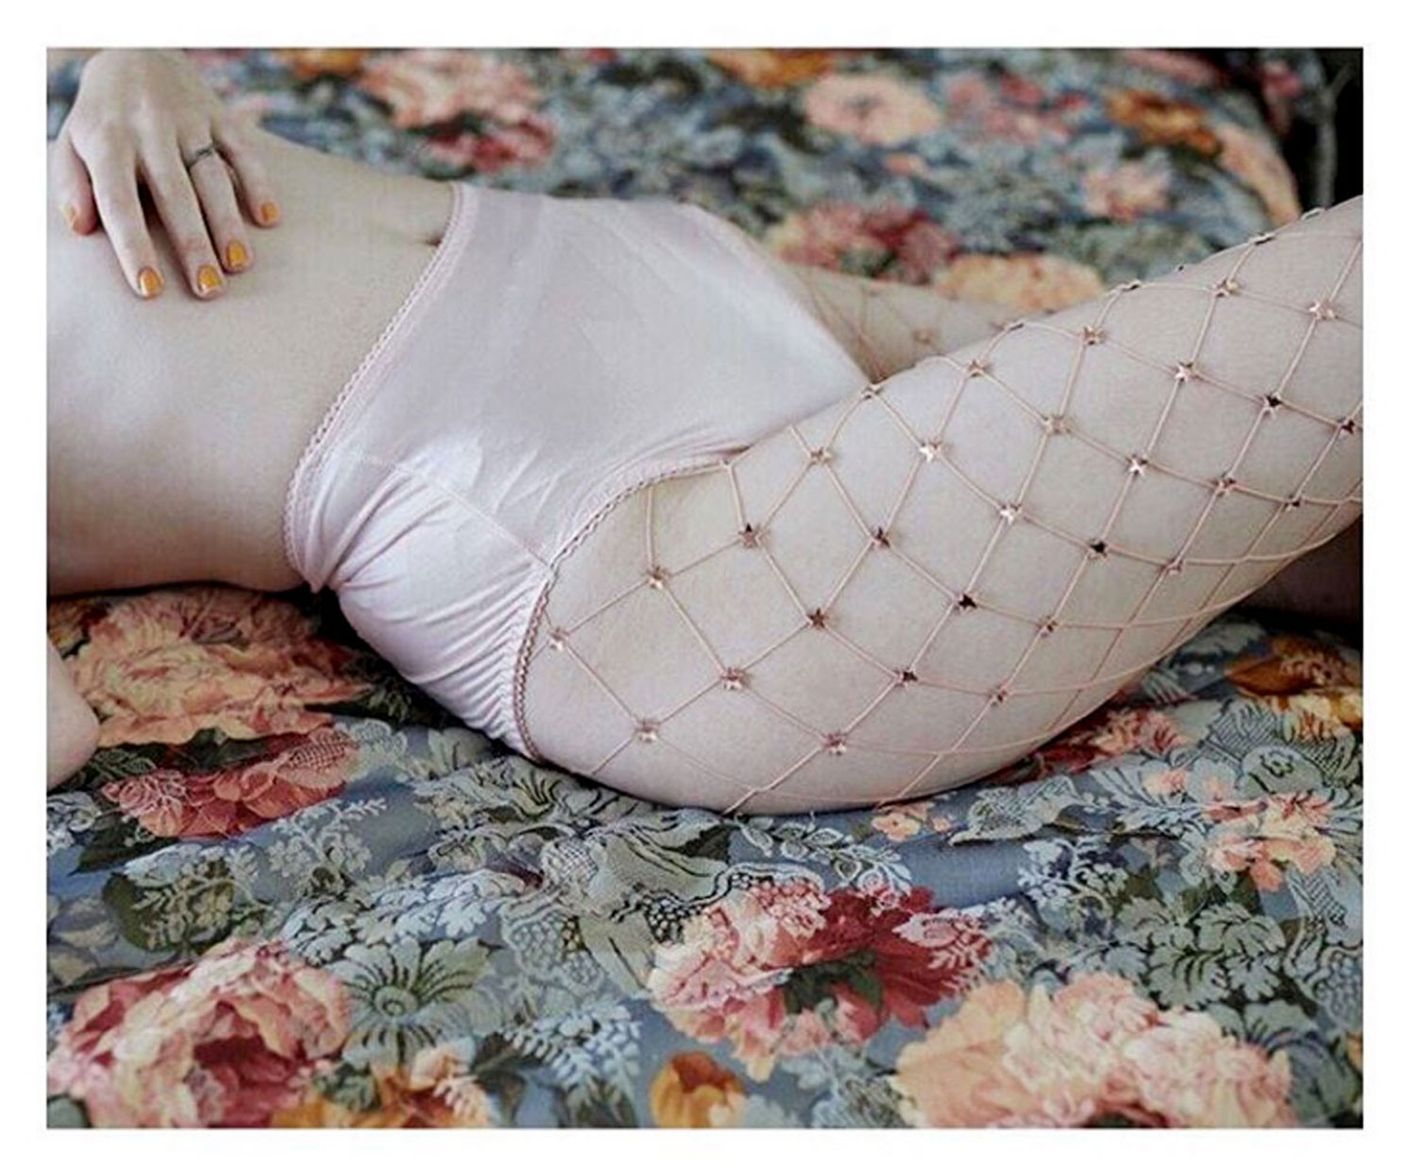 If you want mermaid legs, wear these Lirika Matoshi tights